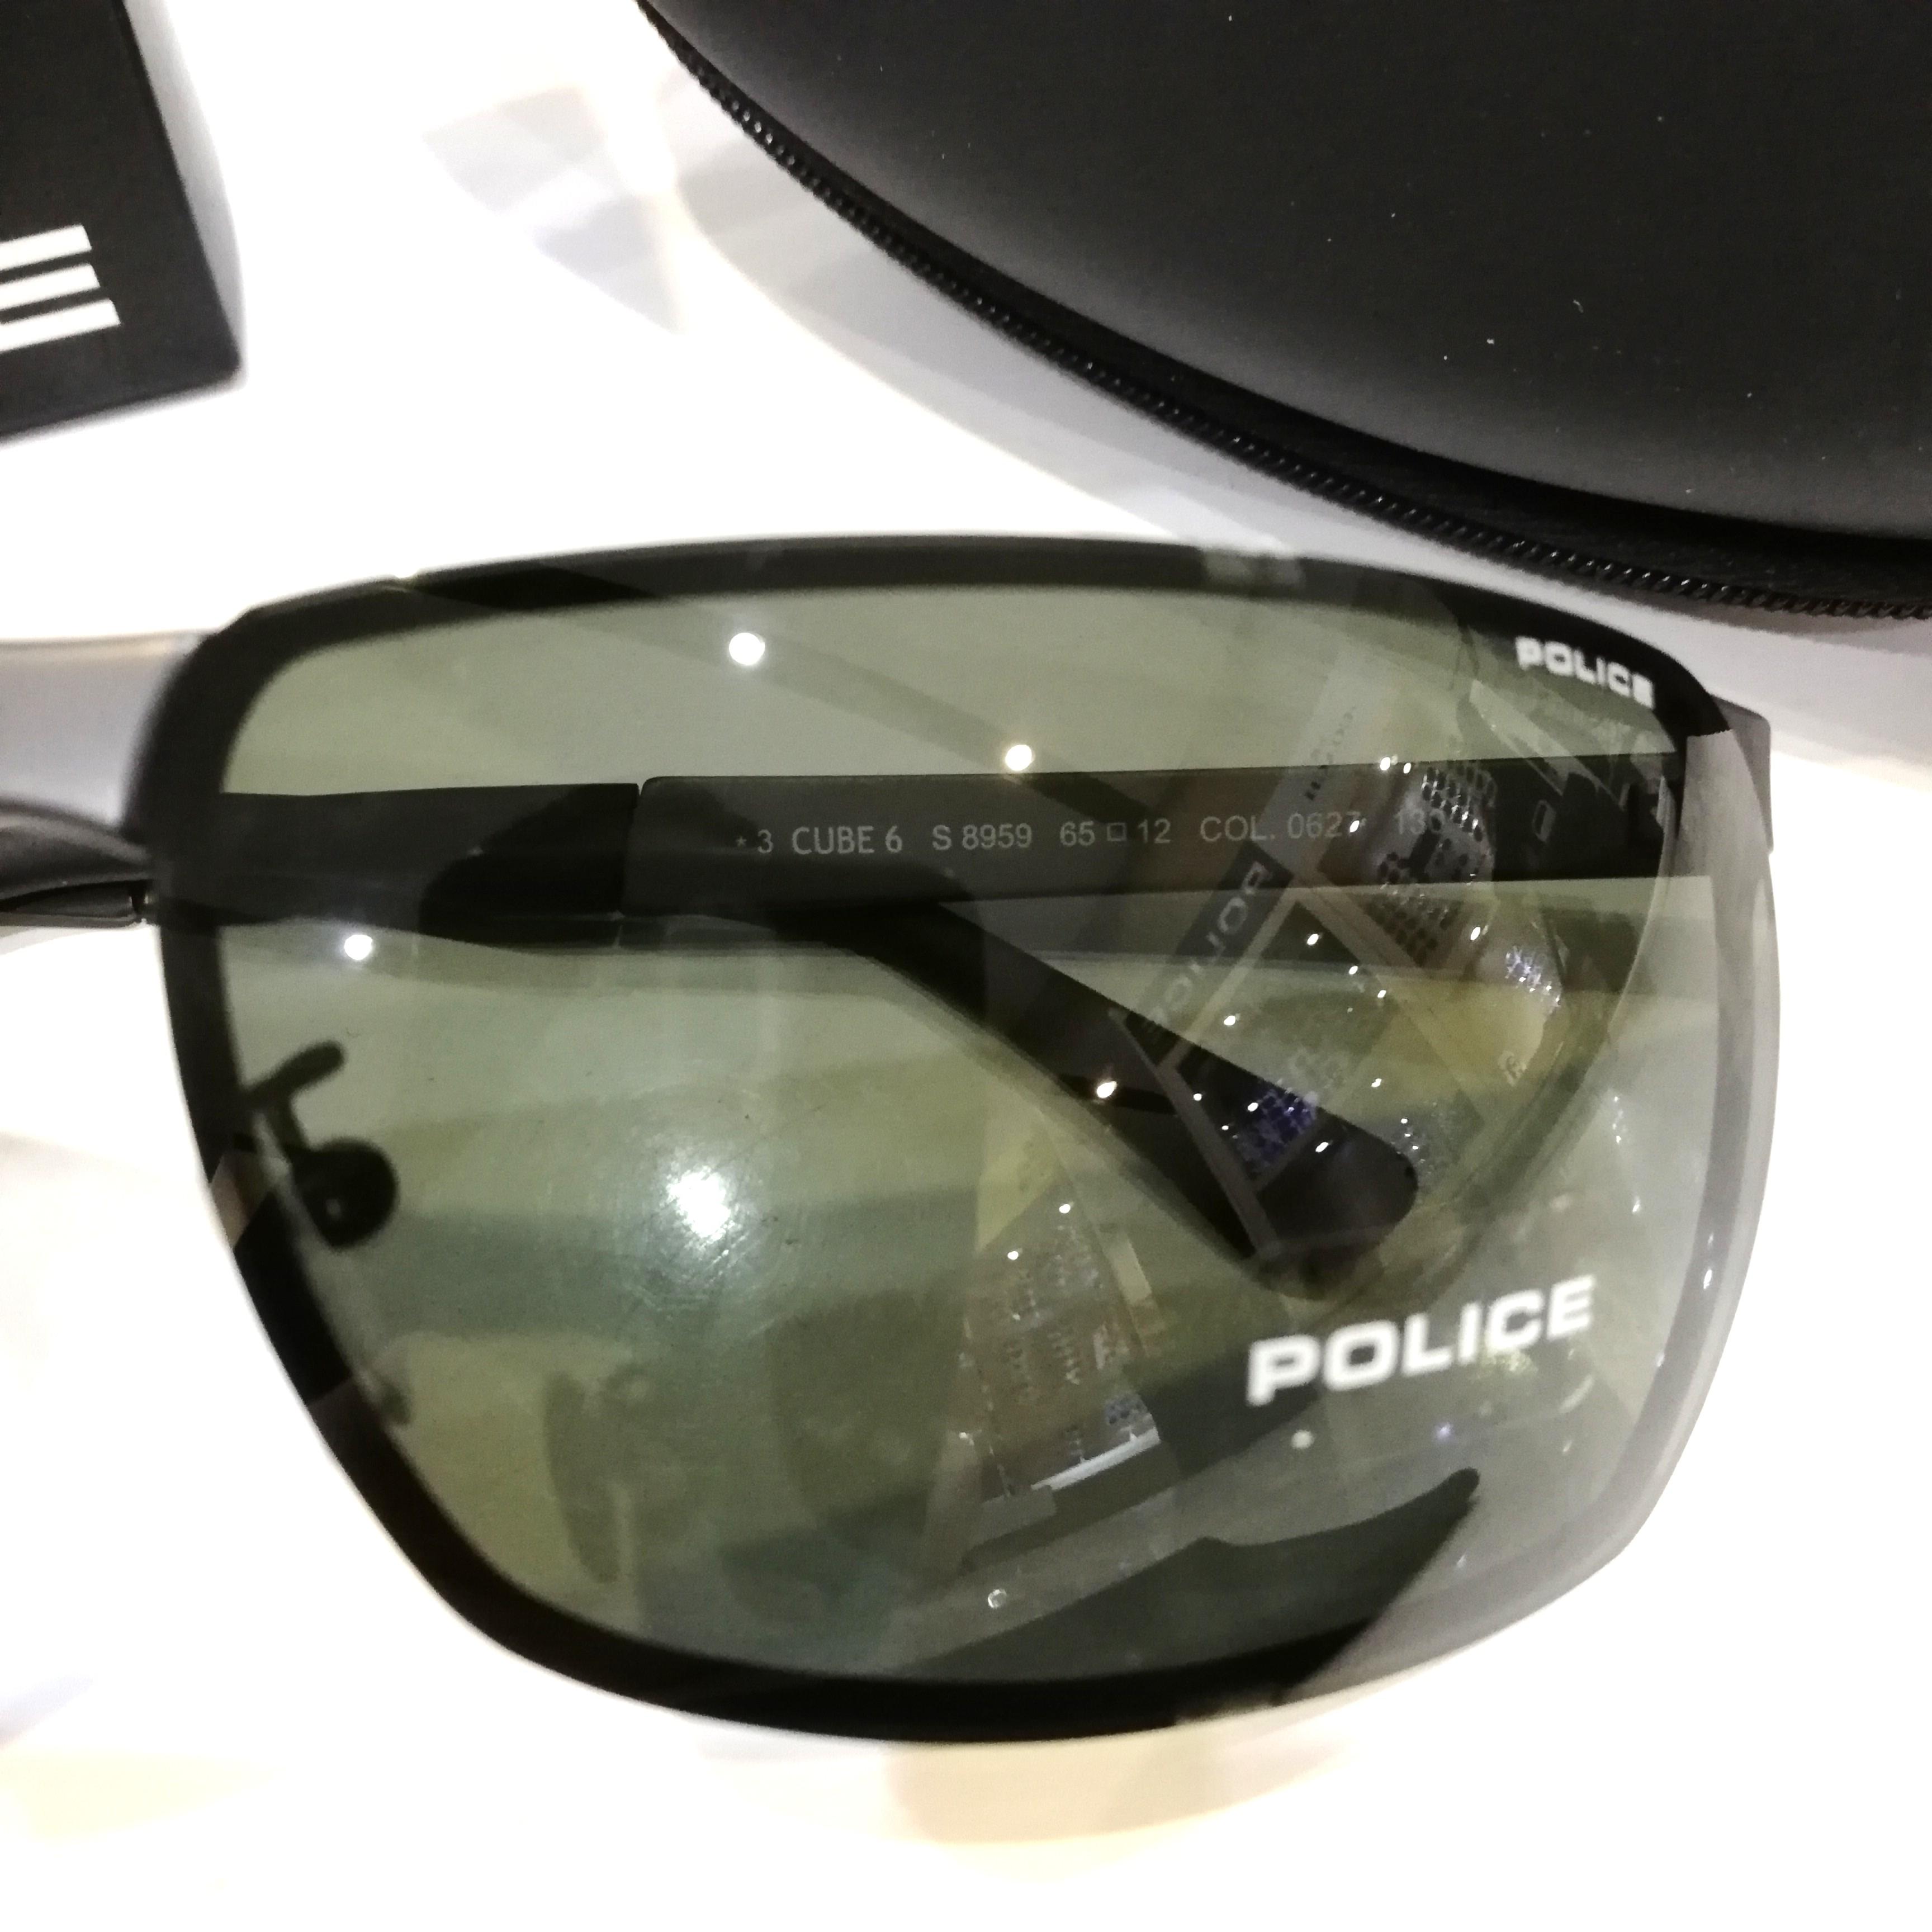 Authentic POLICE Sunglasses Aviator (S8959 COL 0627), Men's